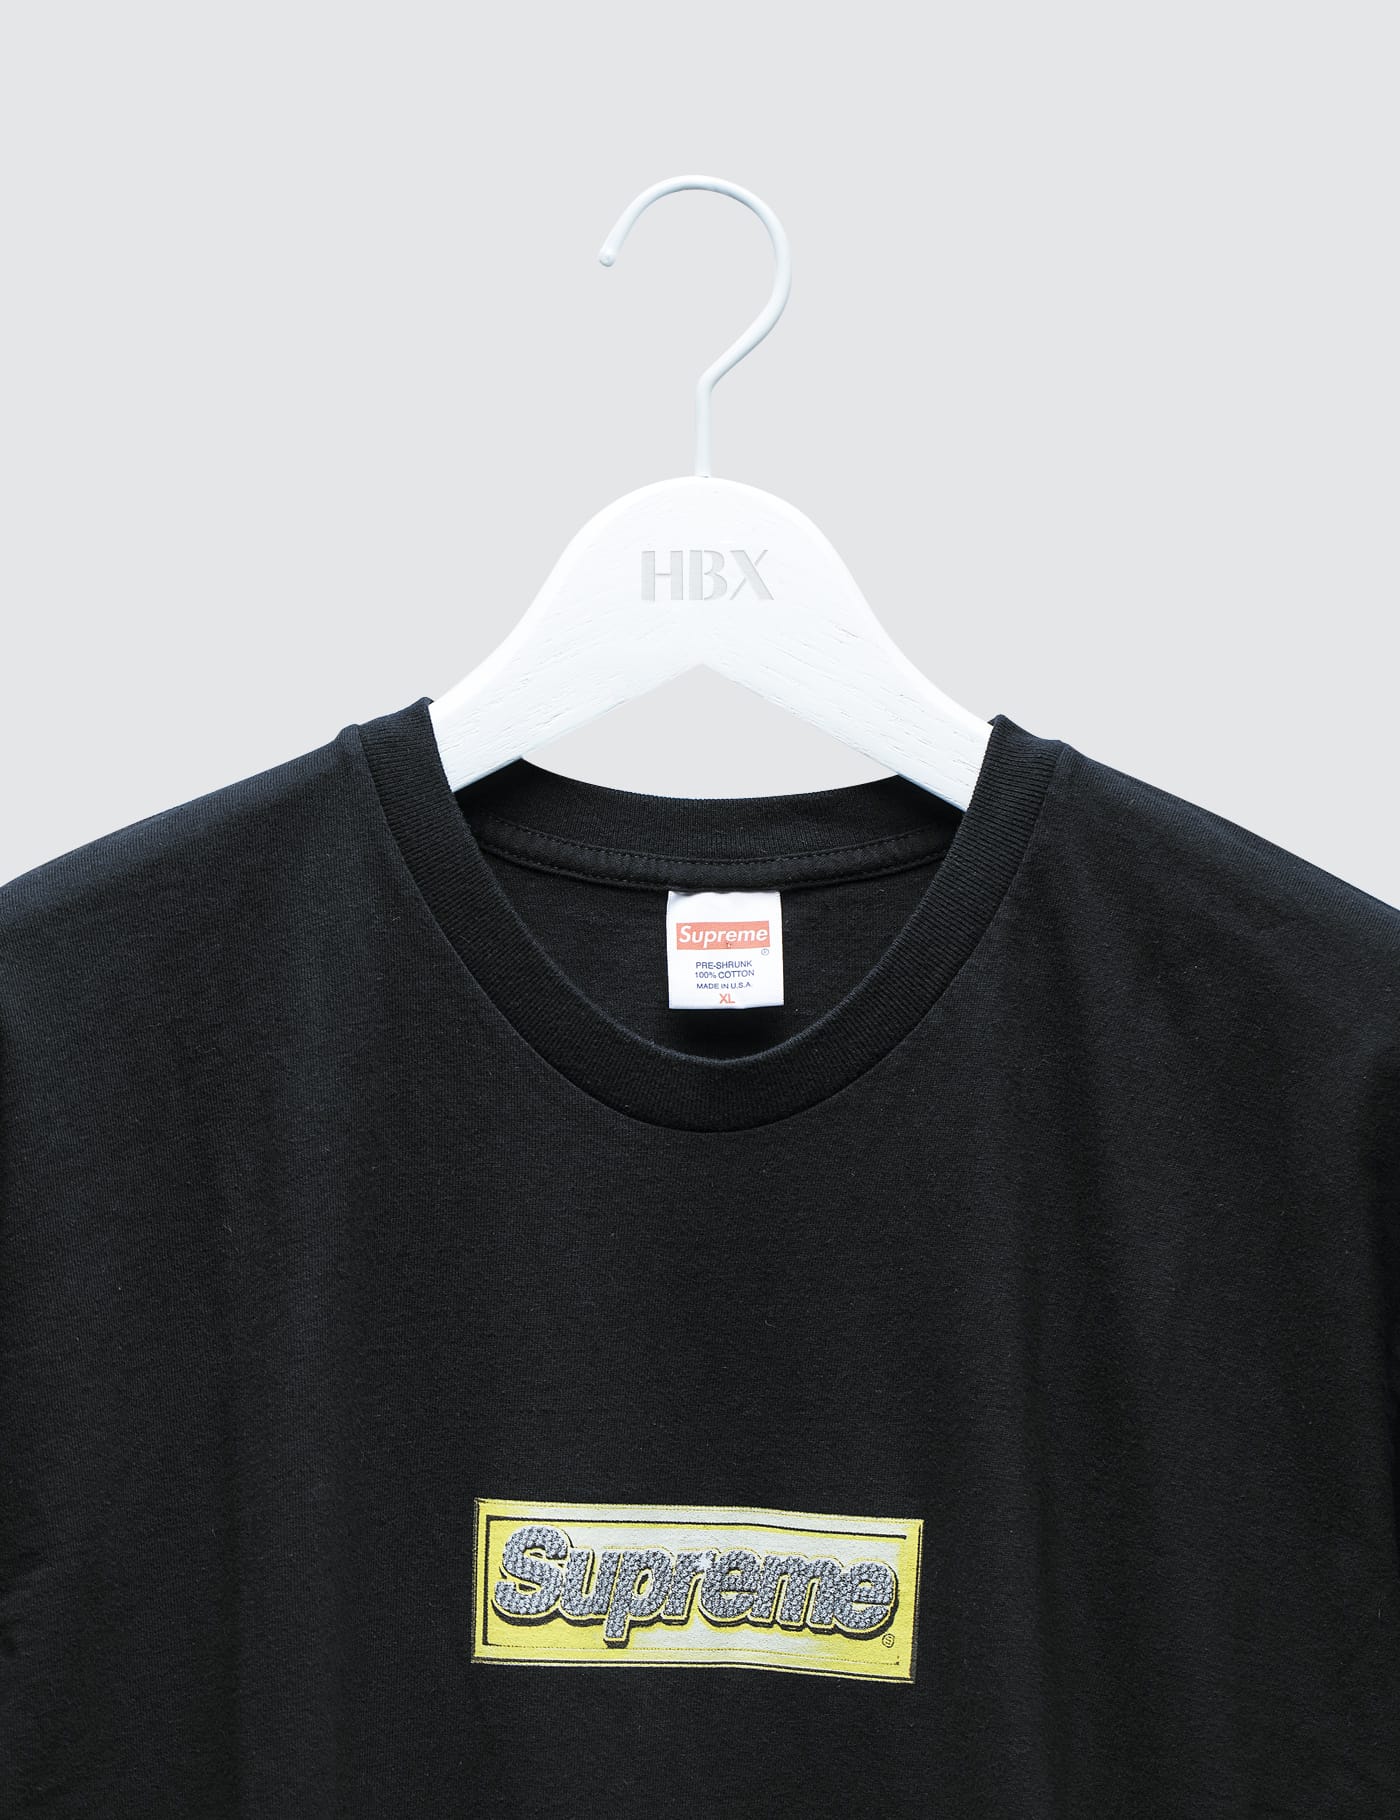 Supreme - Supreme Bling Box Logo T-Shirt | HBX - Globally Curated